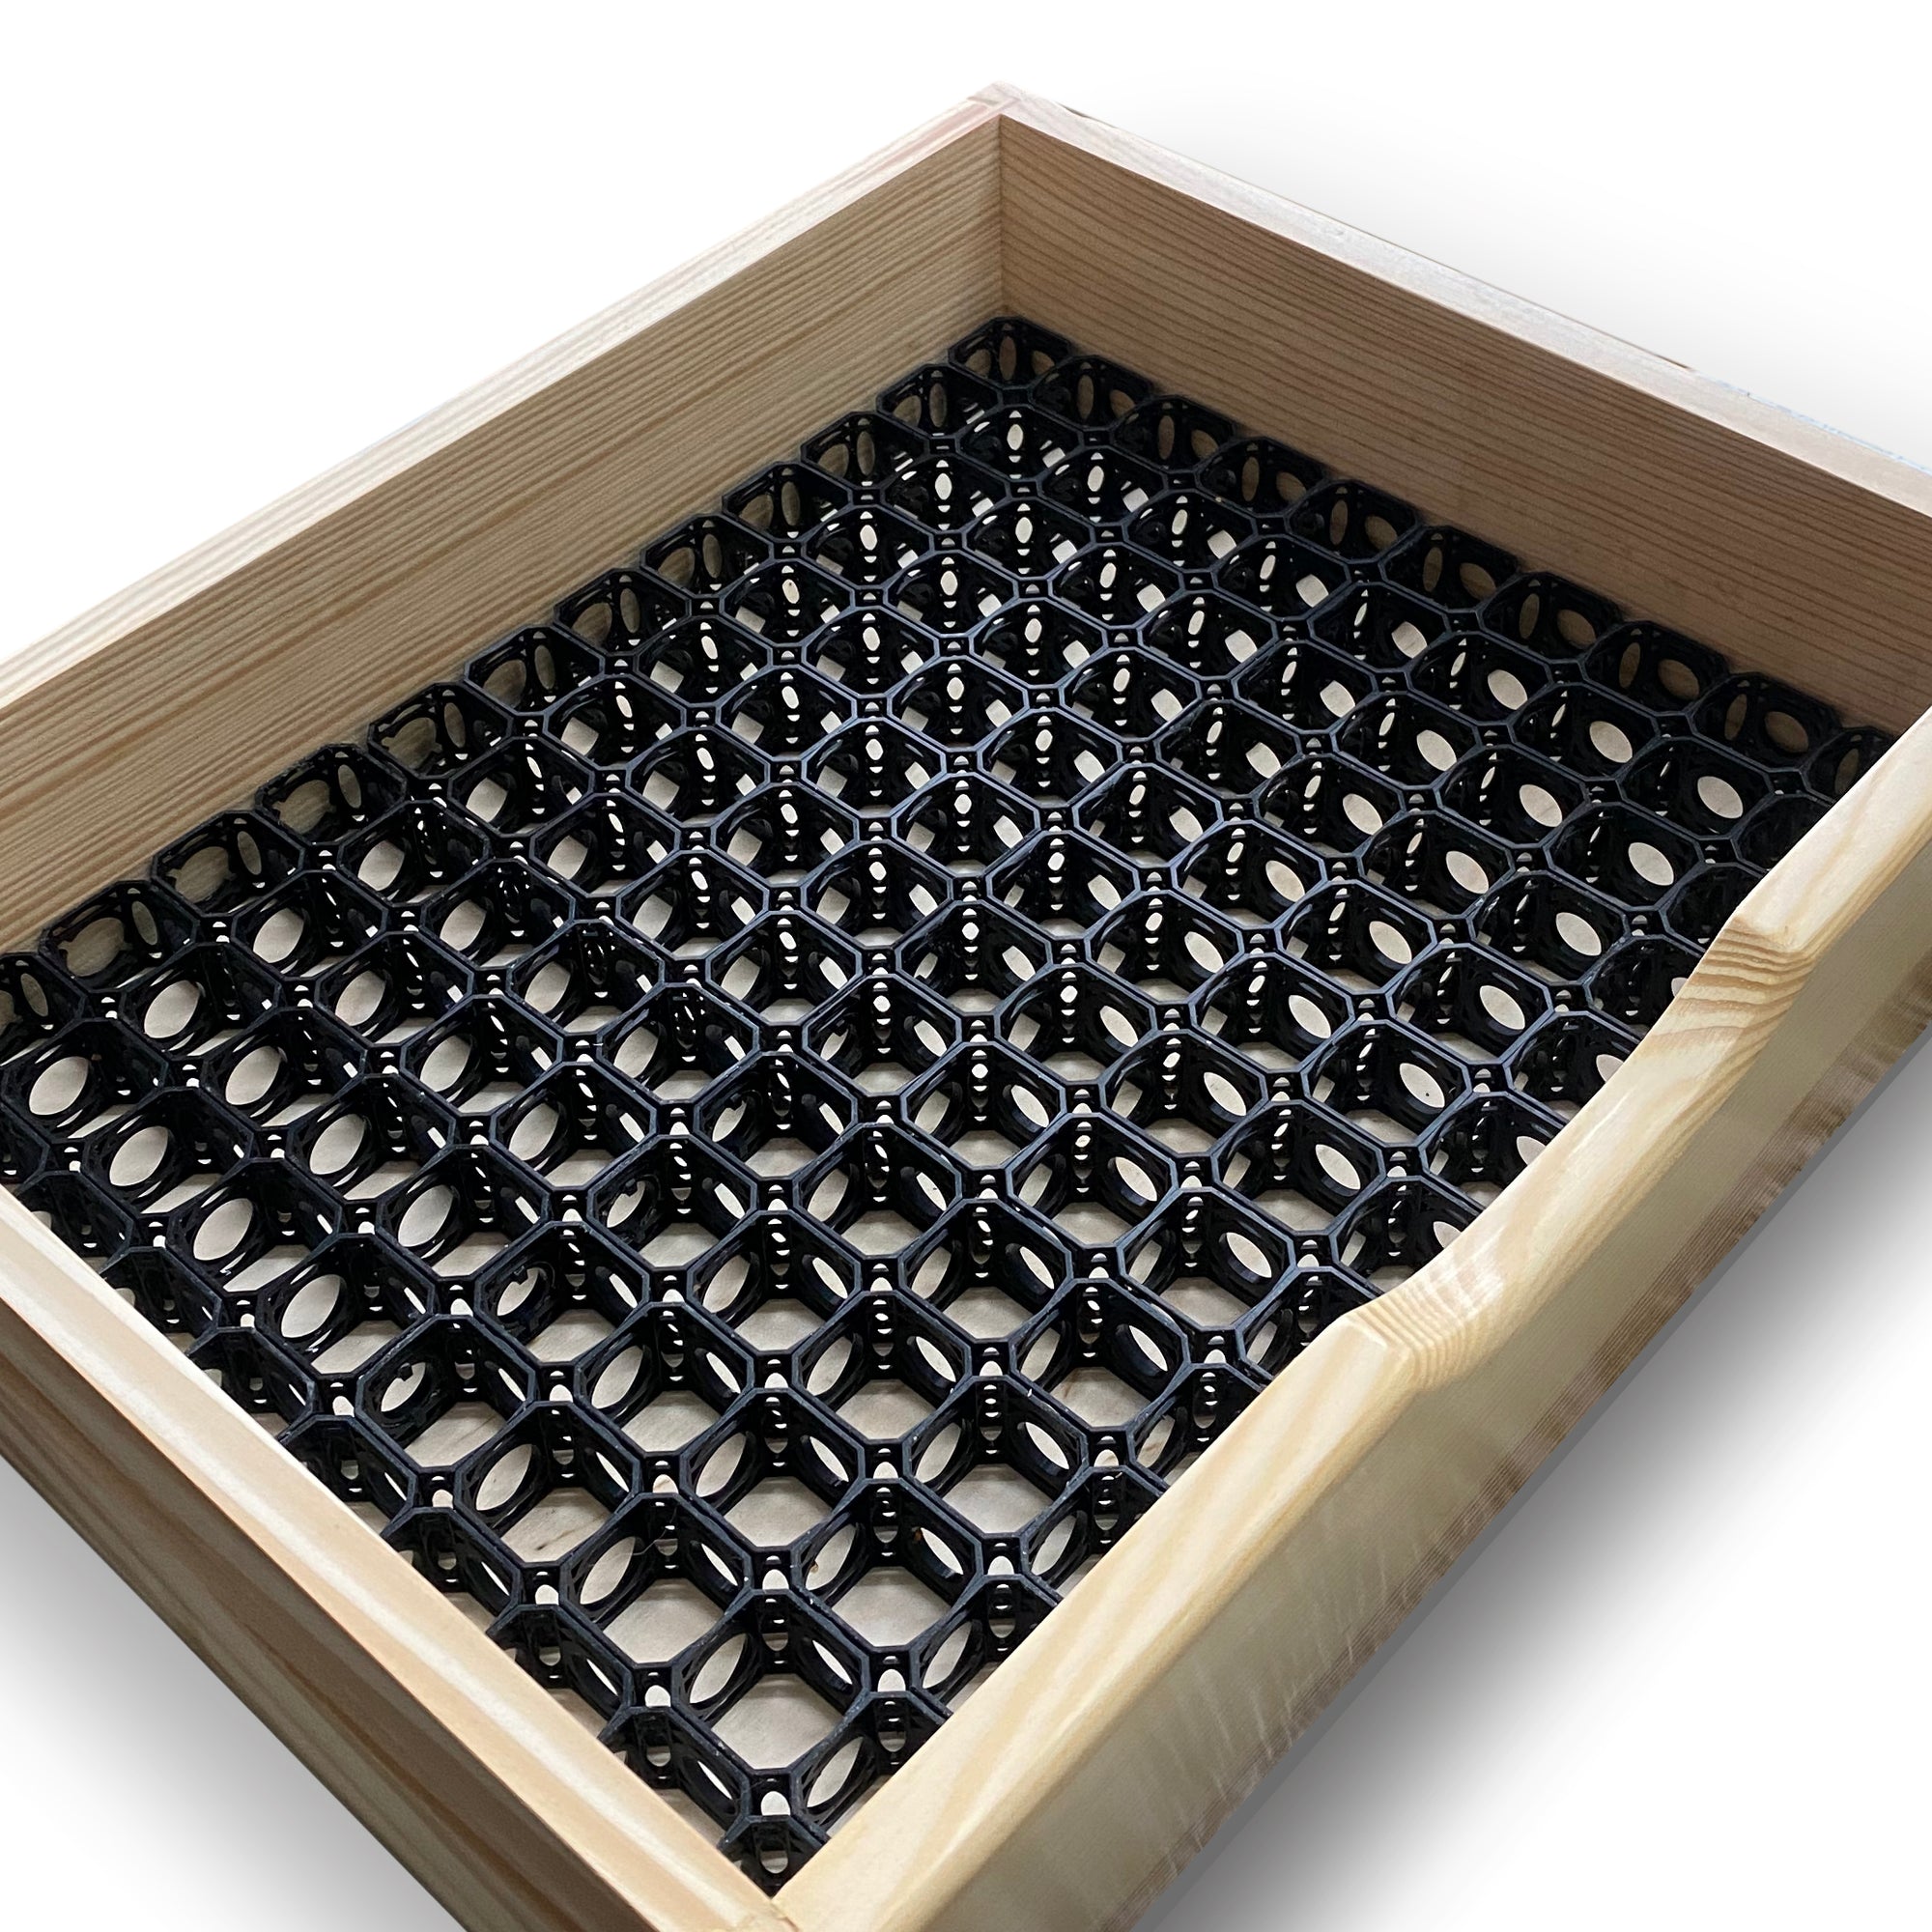 24mm Grid For Pine Storage Unit Drawer